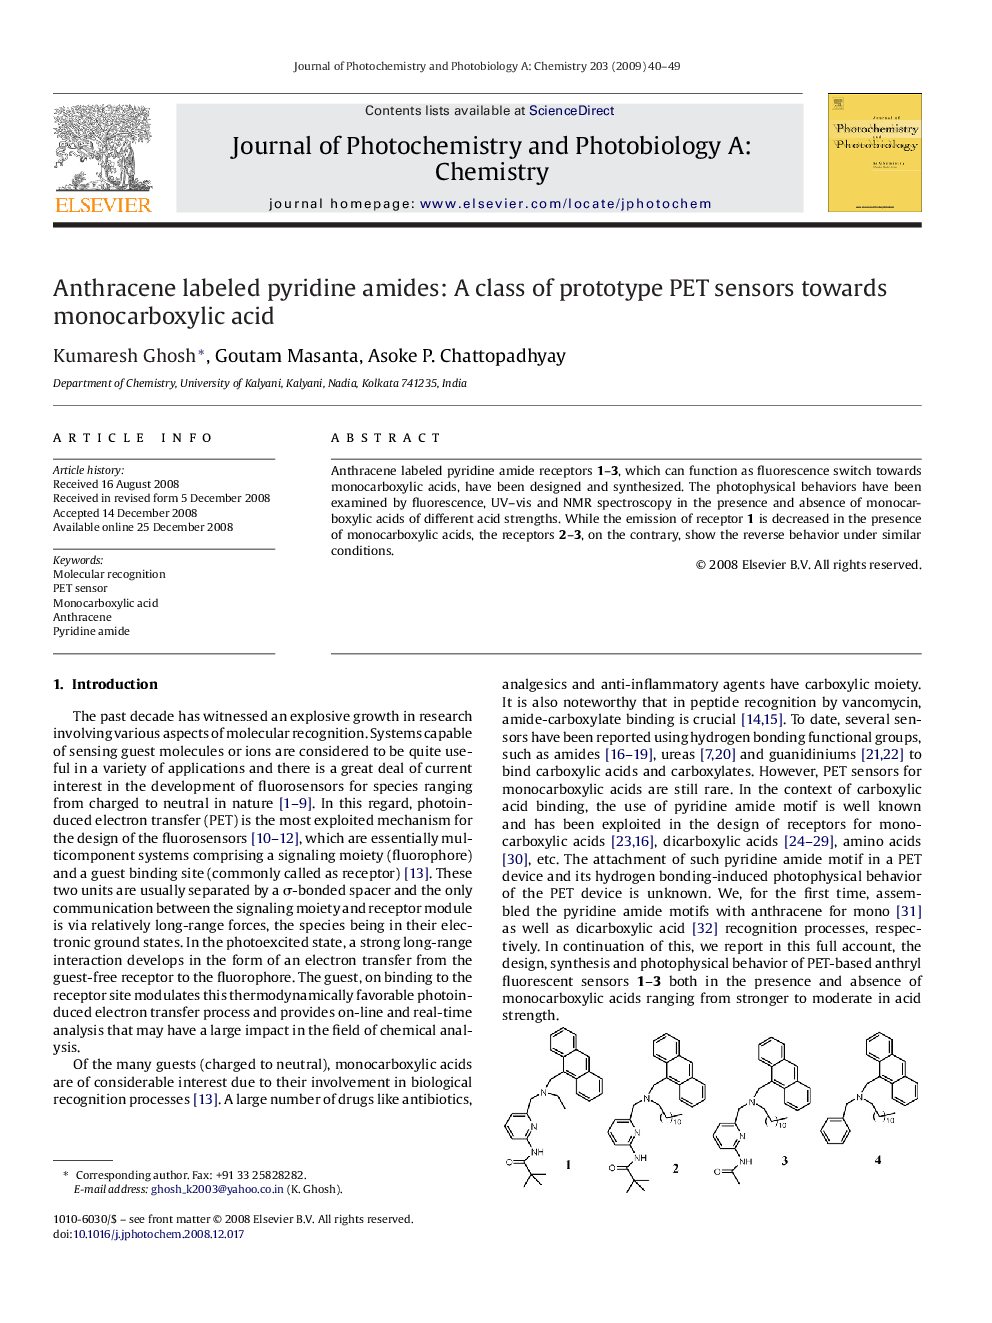 Anthracene labeled pyridine amides: A class of prototype PET sensors towards monocarboxylic acid